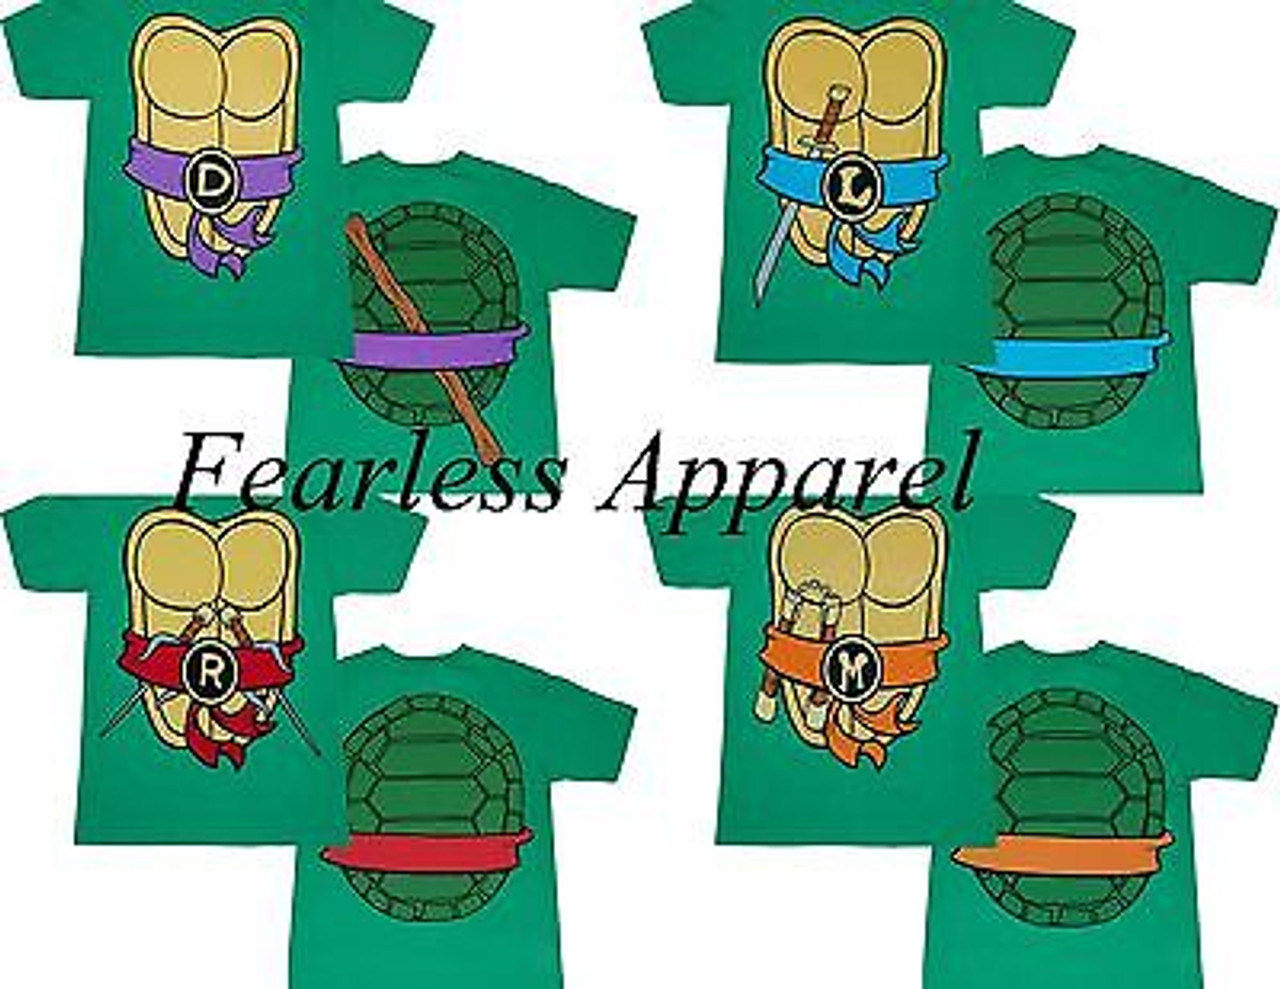 Men's Teenage Mutant Ninja Turtles Adult Costume Graphic T-Shirt